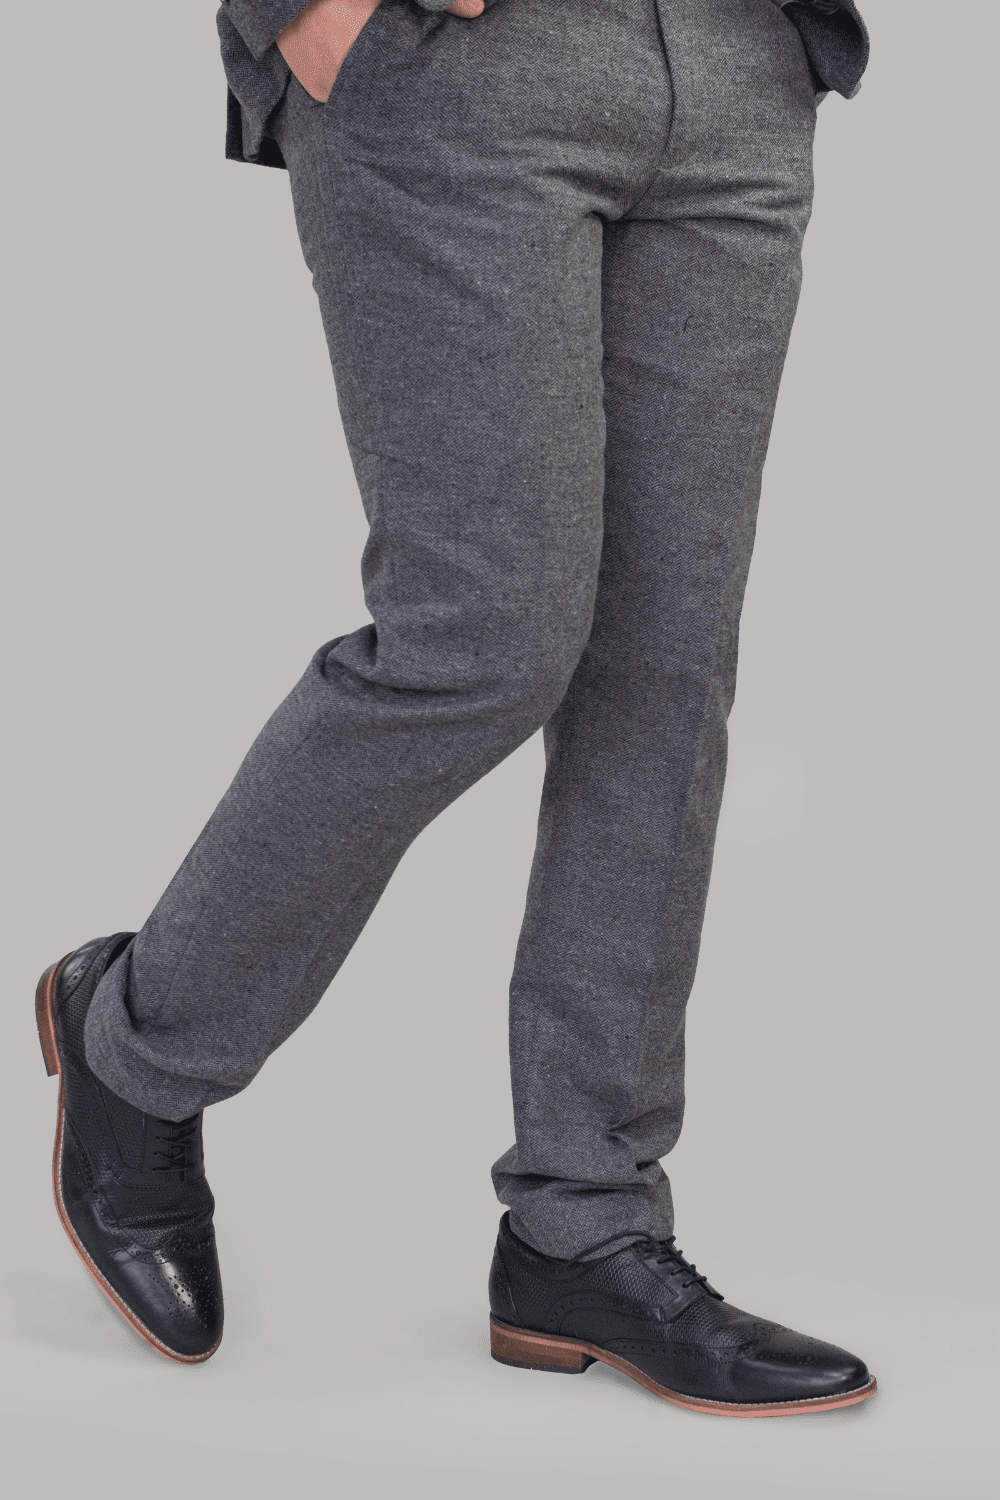 Grey Herringbone Tweed Trousers - STOCK CLEARANCE - Trousers Sale - 36R 